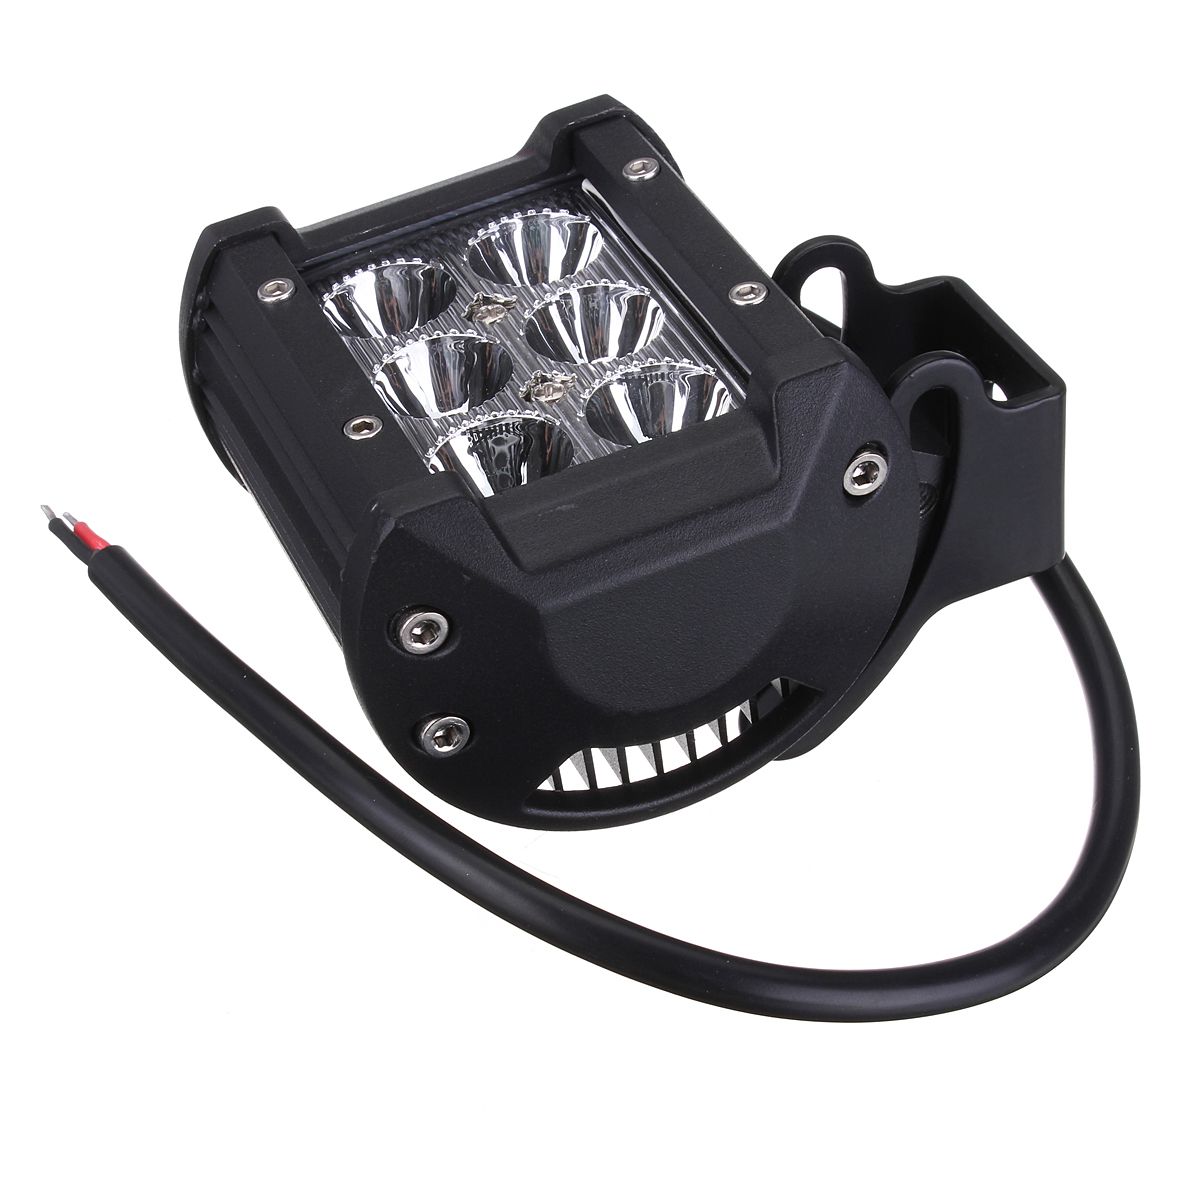 4Inch-18W-LED-Work-Light-Bar-Spot-Beam-Driving-Lamp-12V-1500LM-White-for-Jeep-SUV-ATV-Trailer-955214